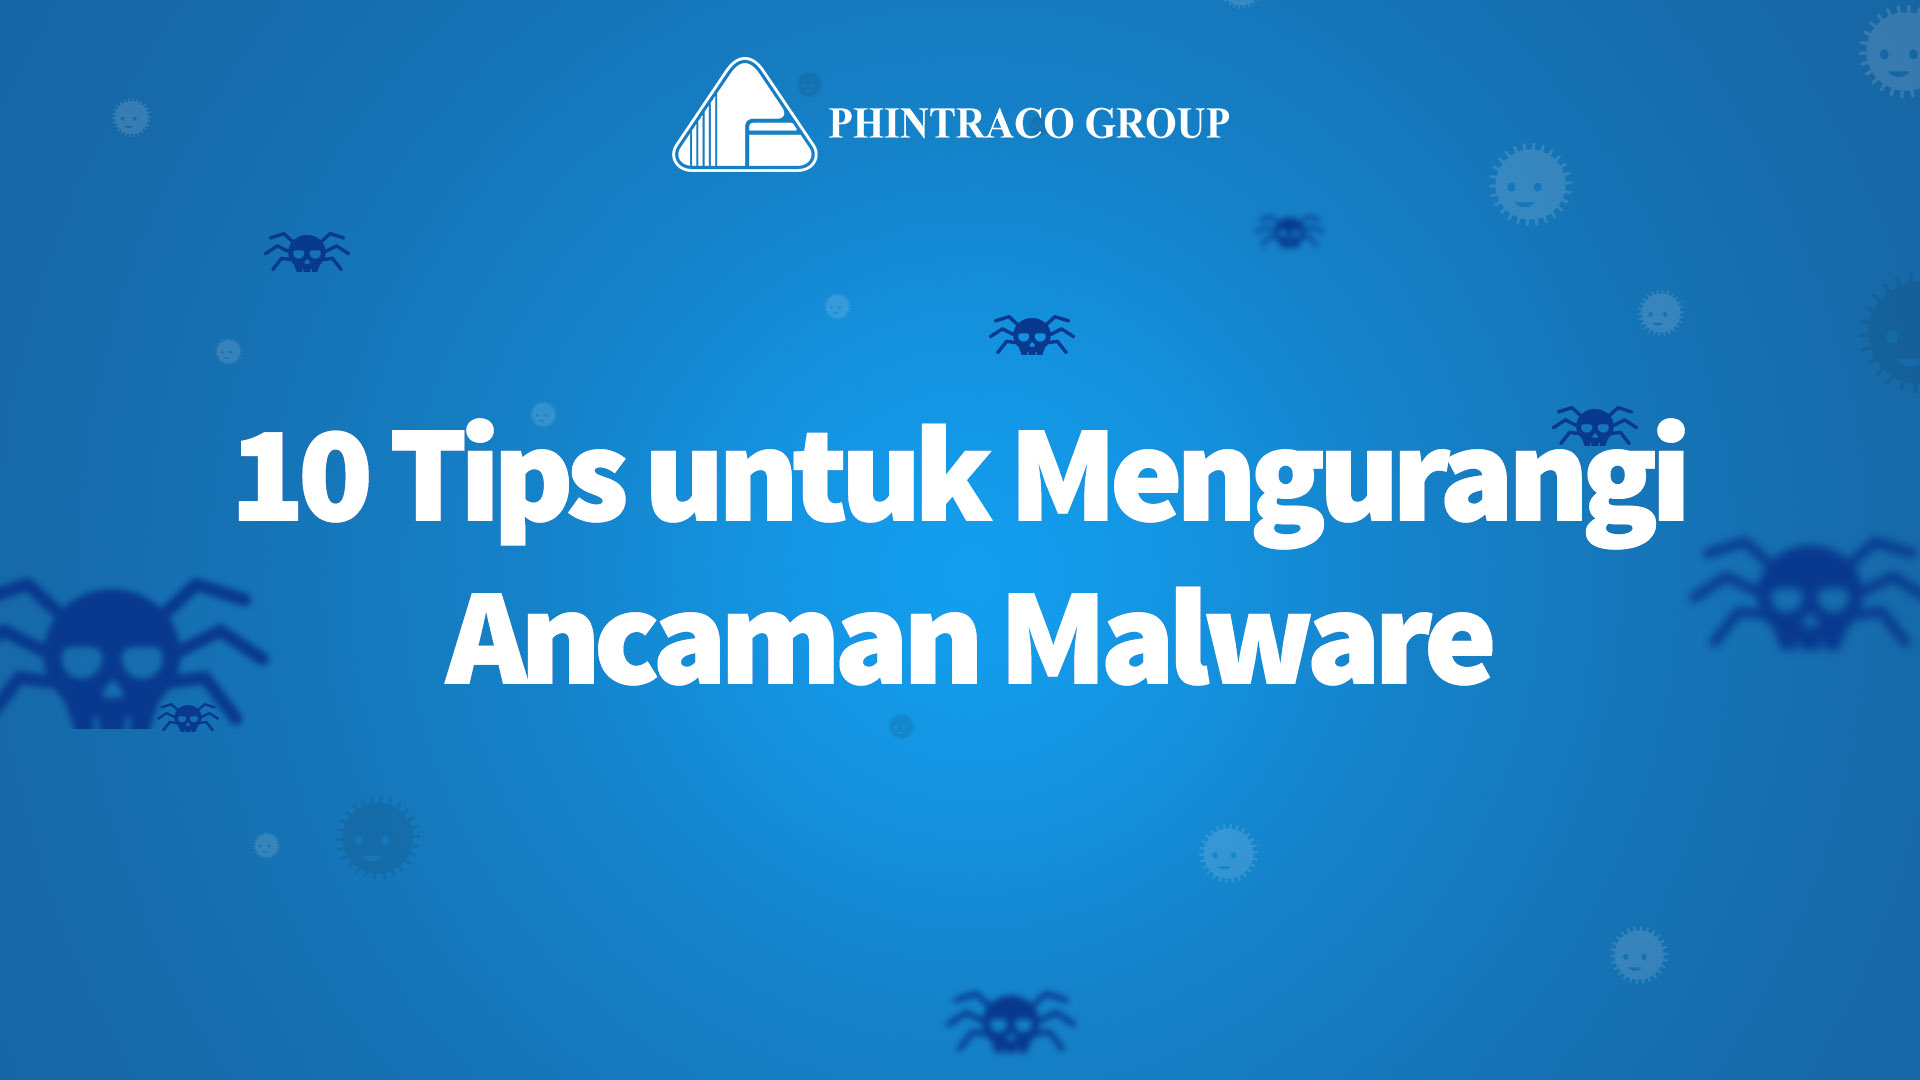 10 Tips untuk Mengurangi Ancaman Malware